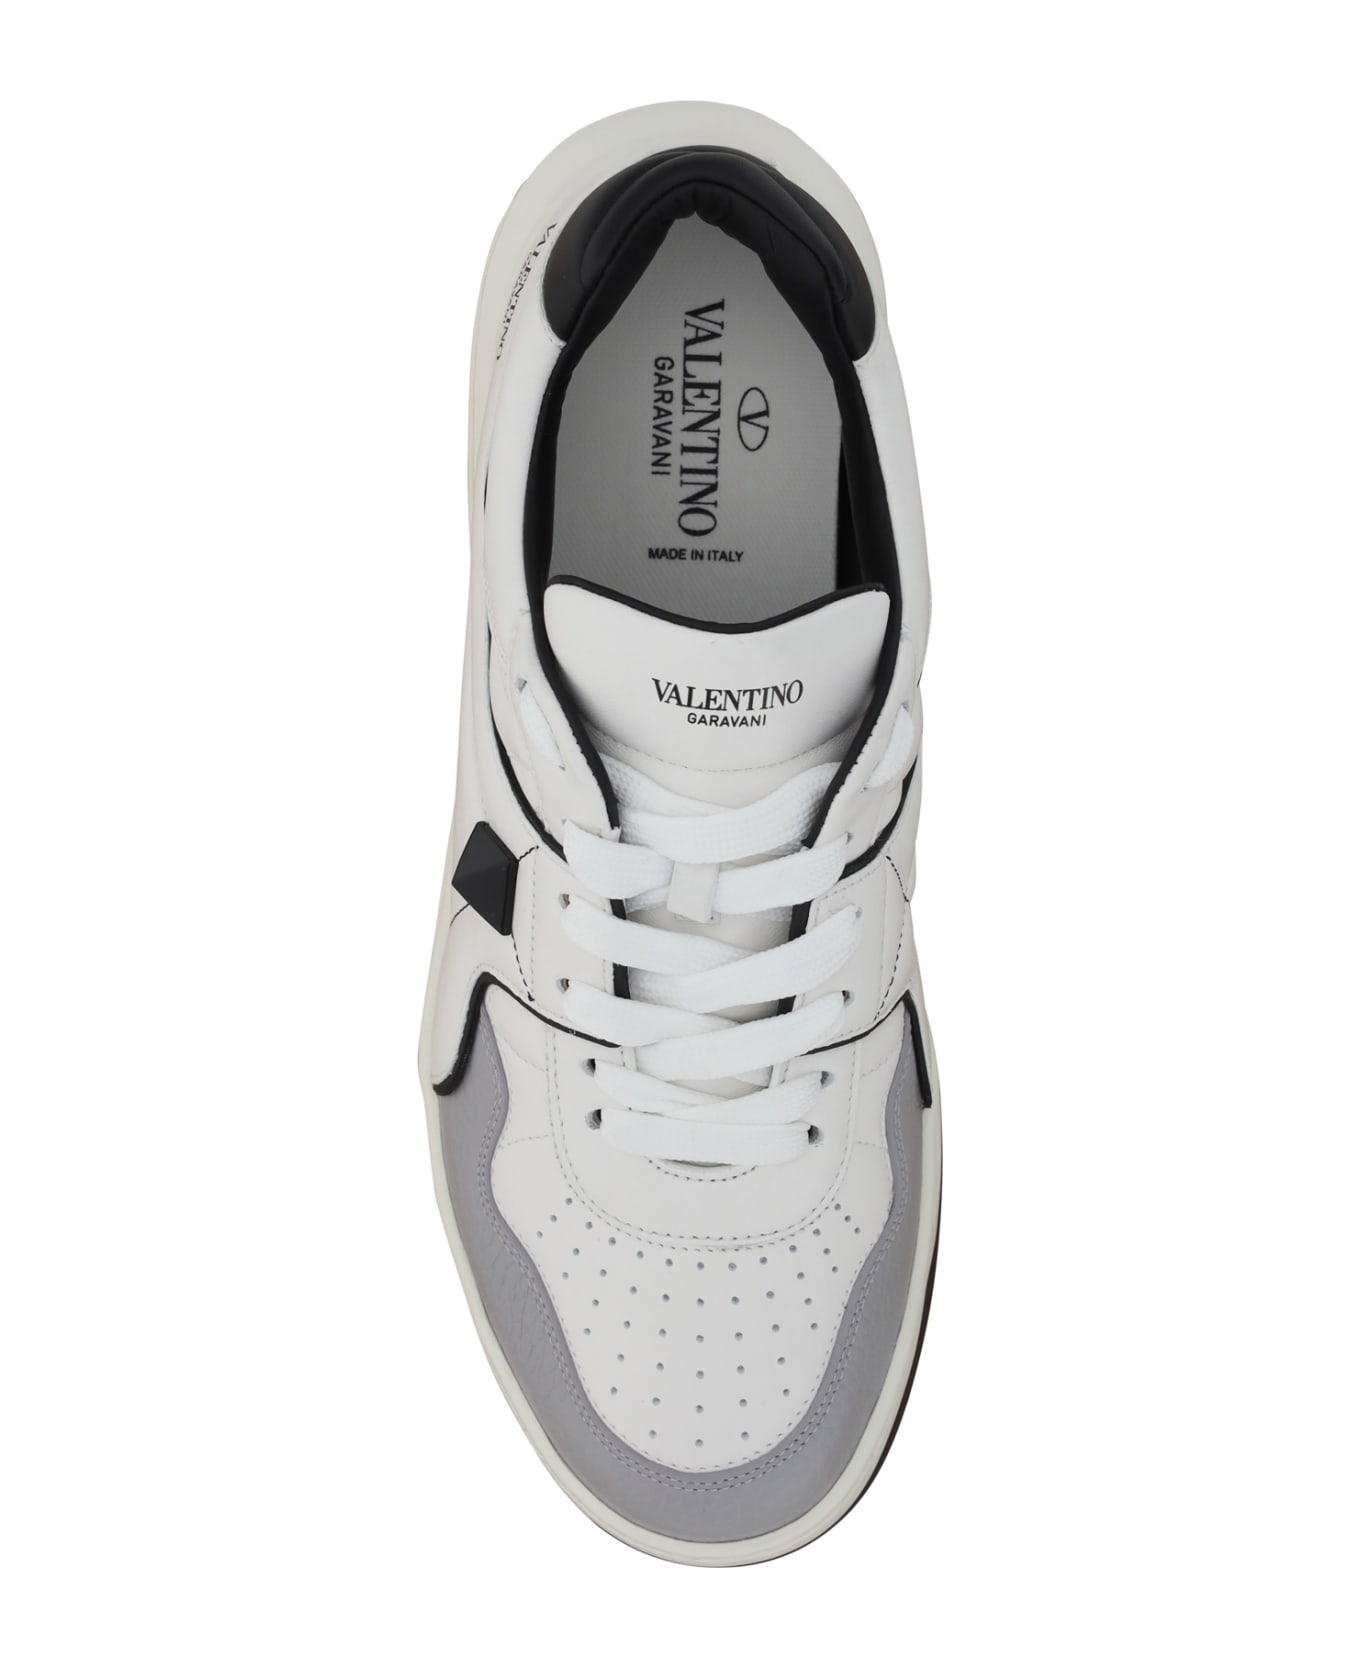 Valentino Garavani One Stud Sneakers - Bianco-nero/pastel Grey/nero/bianco スニーカー